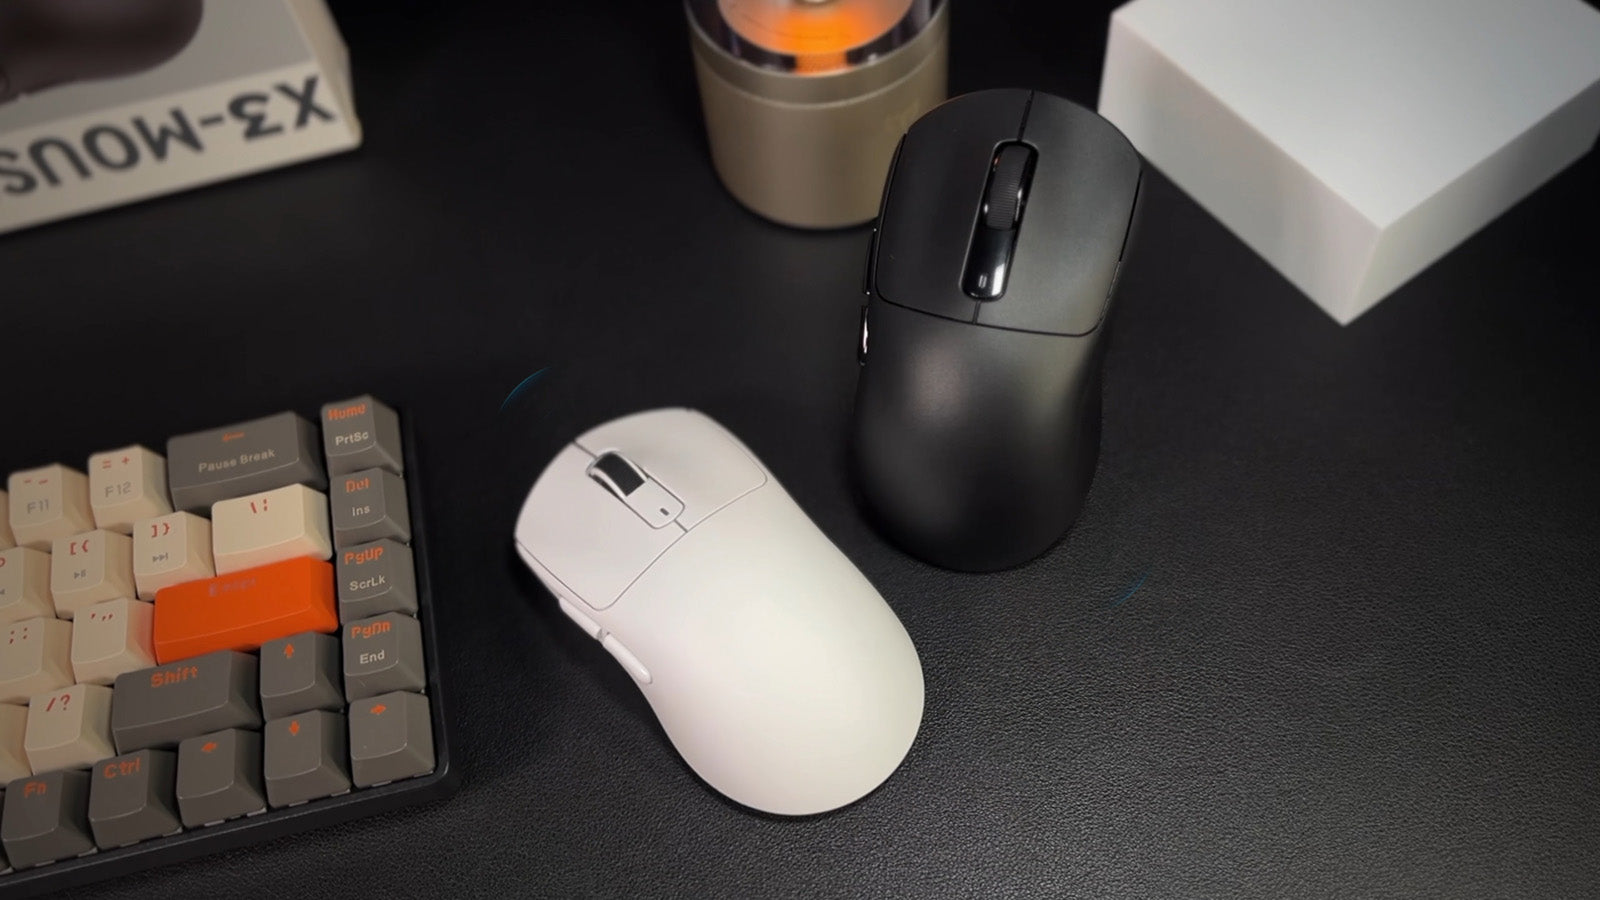 White and black attackshark wireless mouse